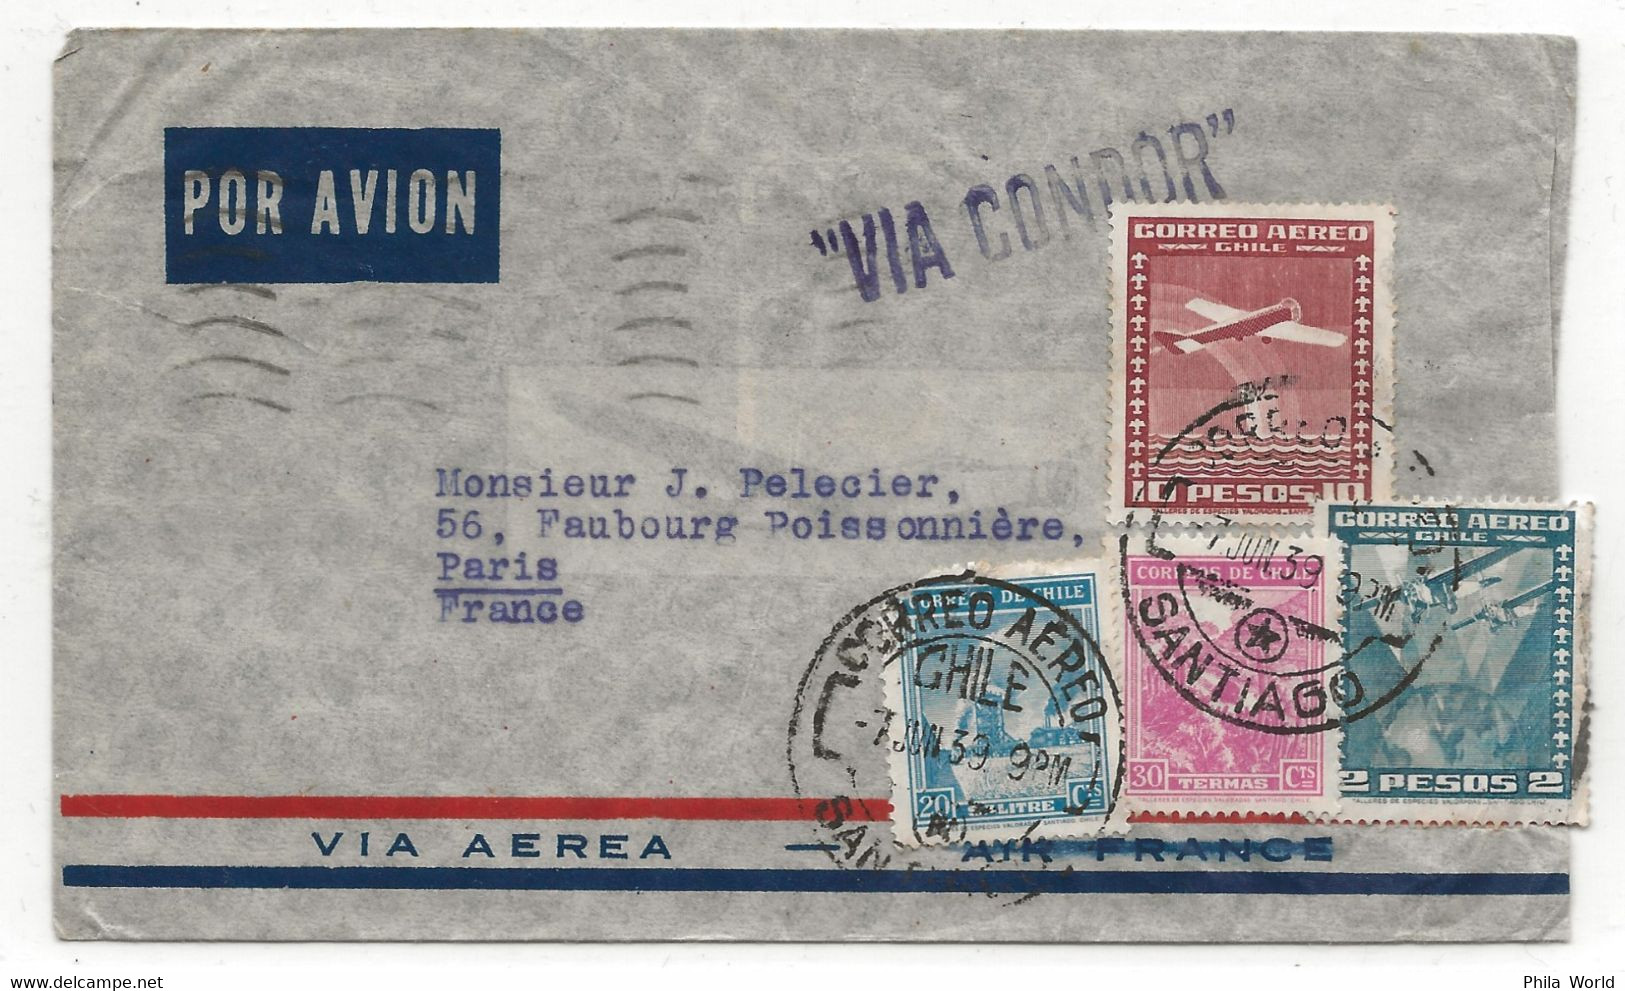 CONDOR LUFTHANSA 1939 CHILI Chile CORREO AEREO POR AVION > Paris FRANCE Air Mail Cover Via MARSEILLE GARE - Aviones